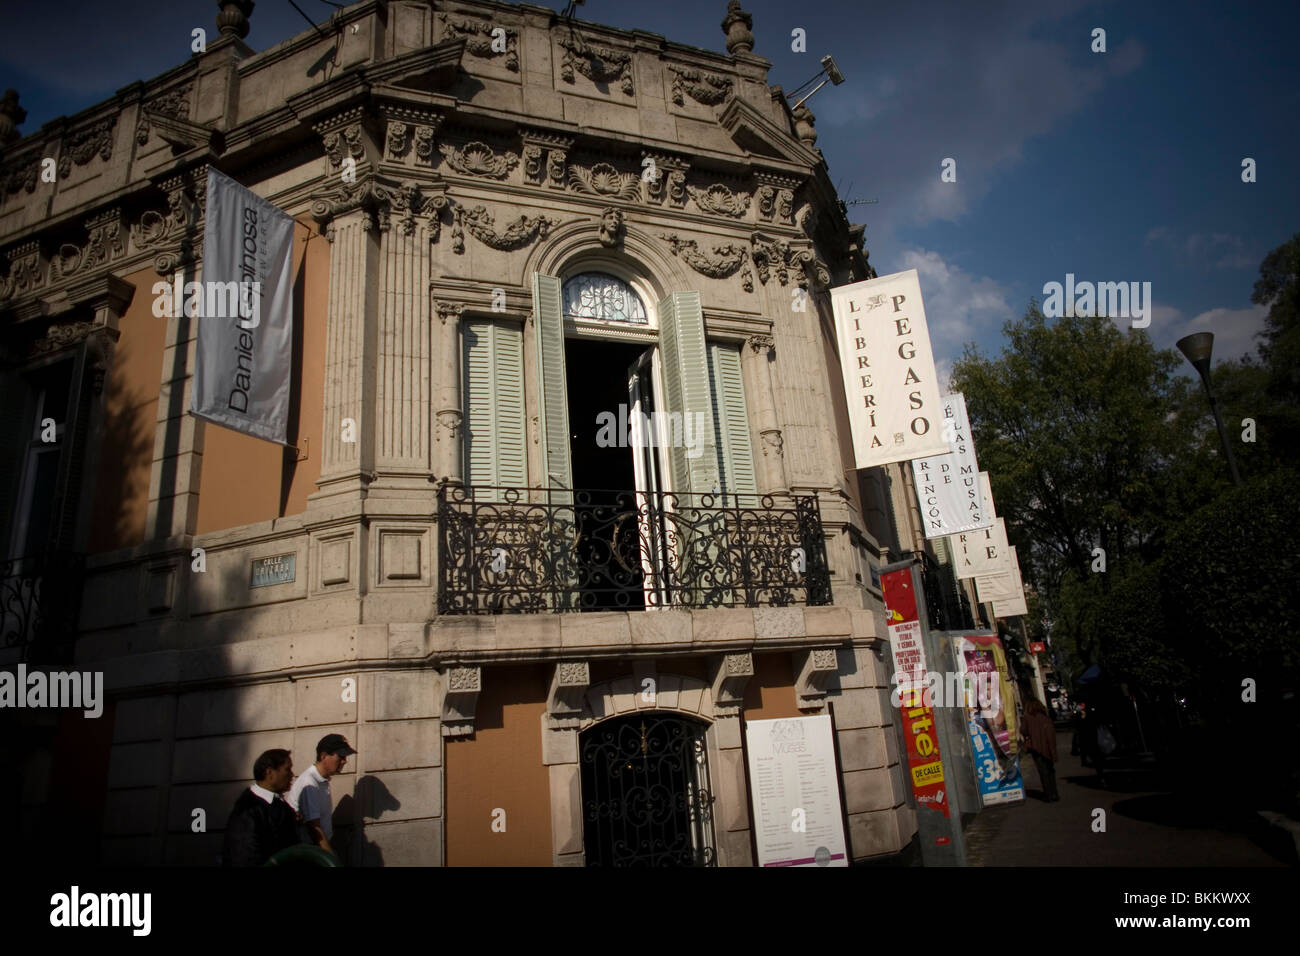 Casa Lamm cultural center in Roma Norte, Mexico City, October 14, 2009. Stock Photo